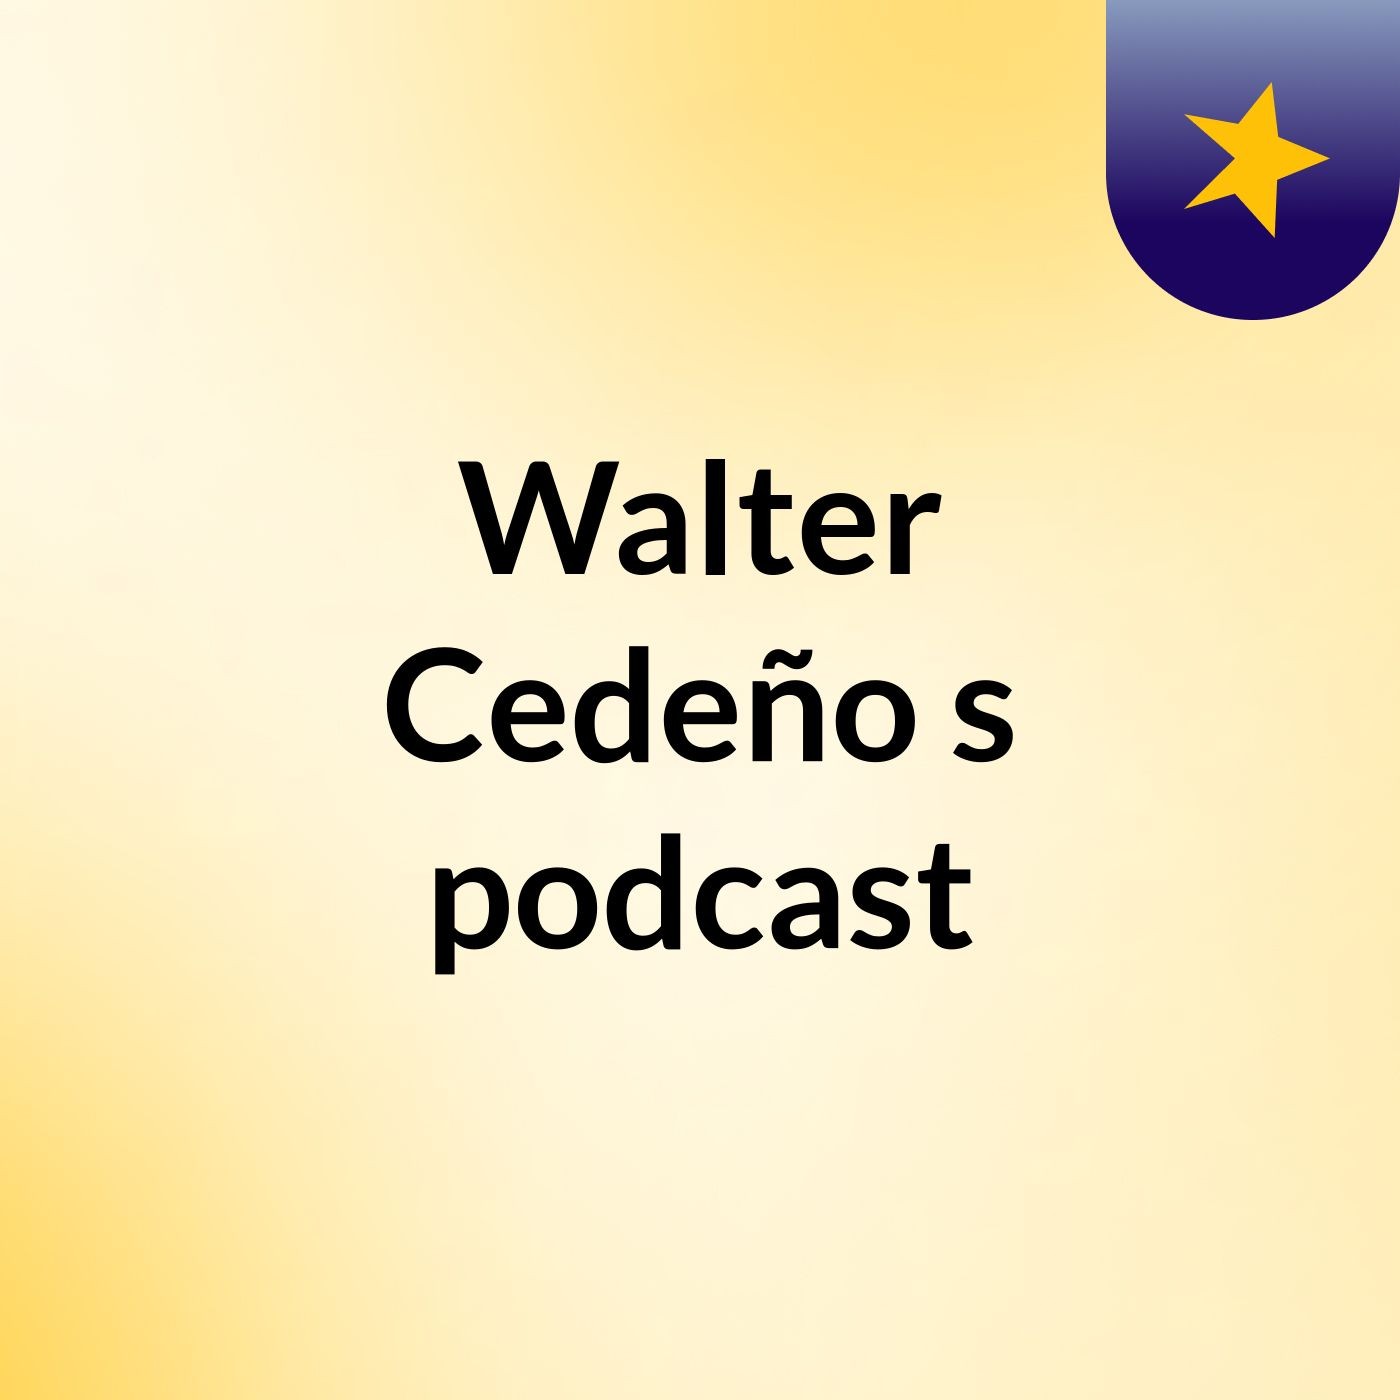 Walter Cedeño's podcast